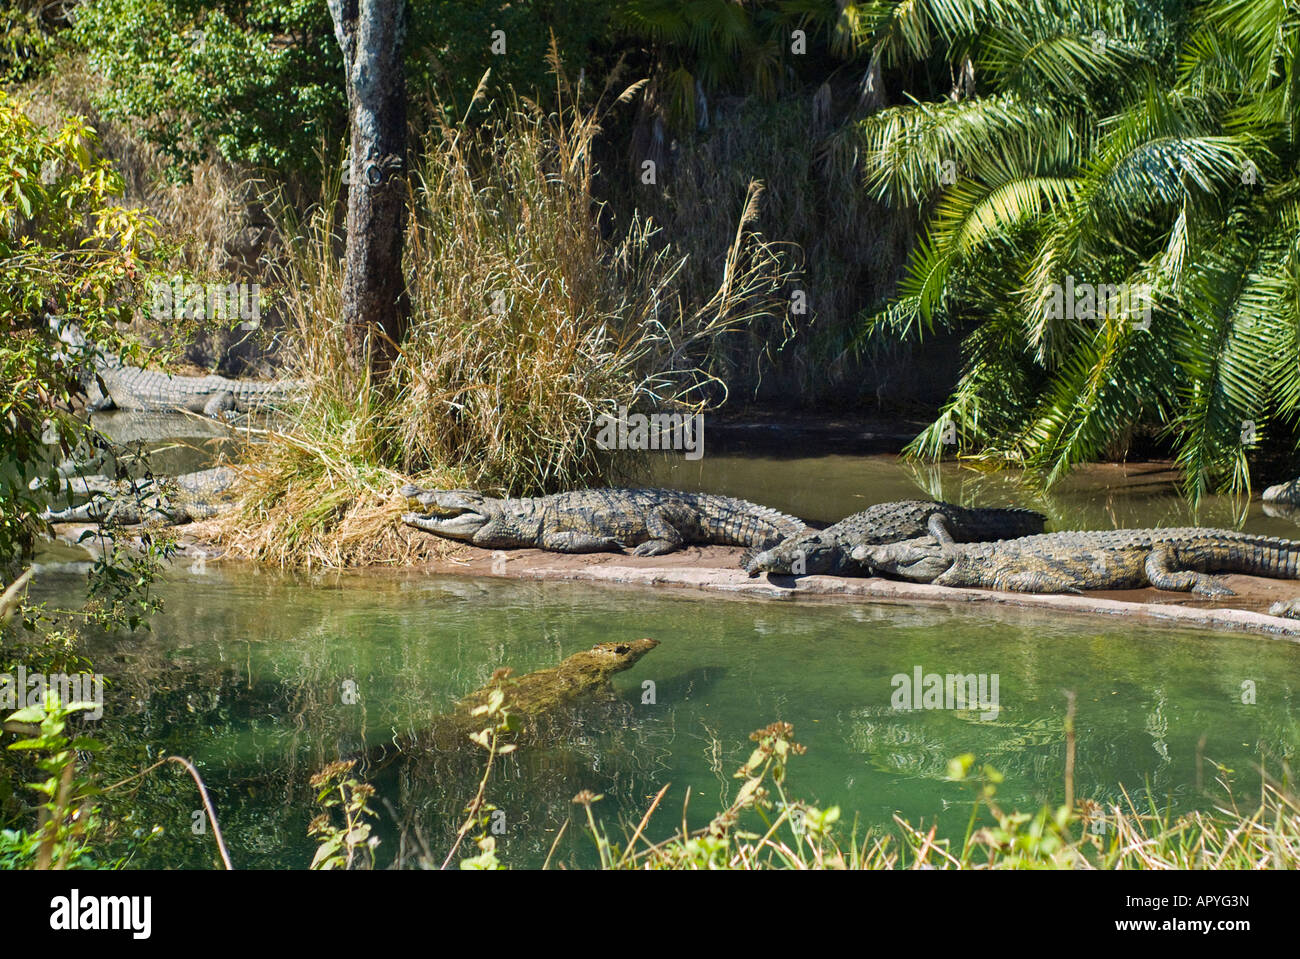 6 Lazy Alligators Stock Photo